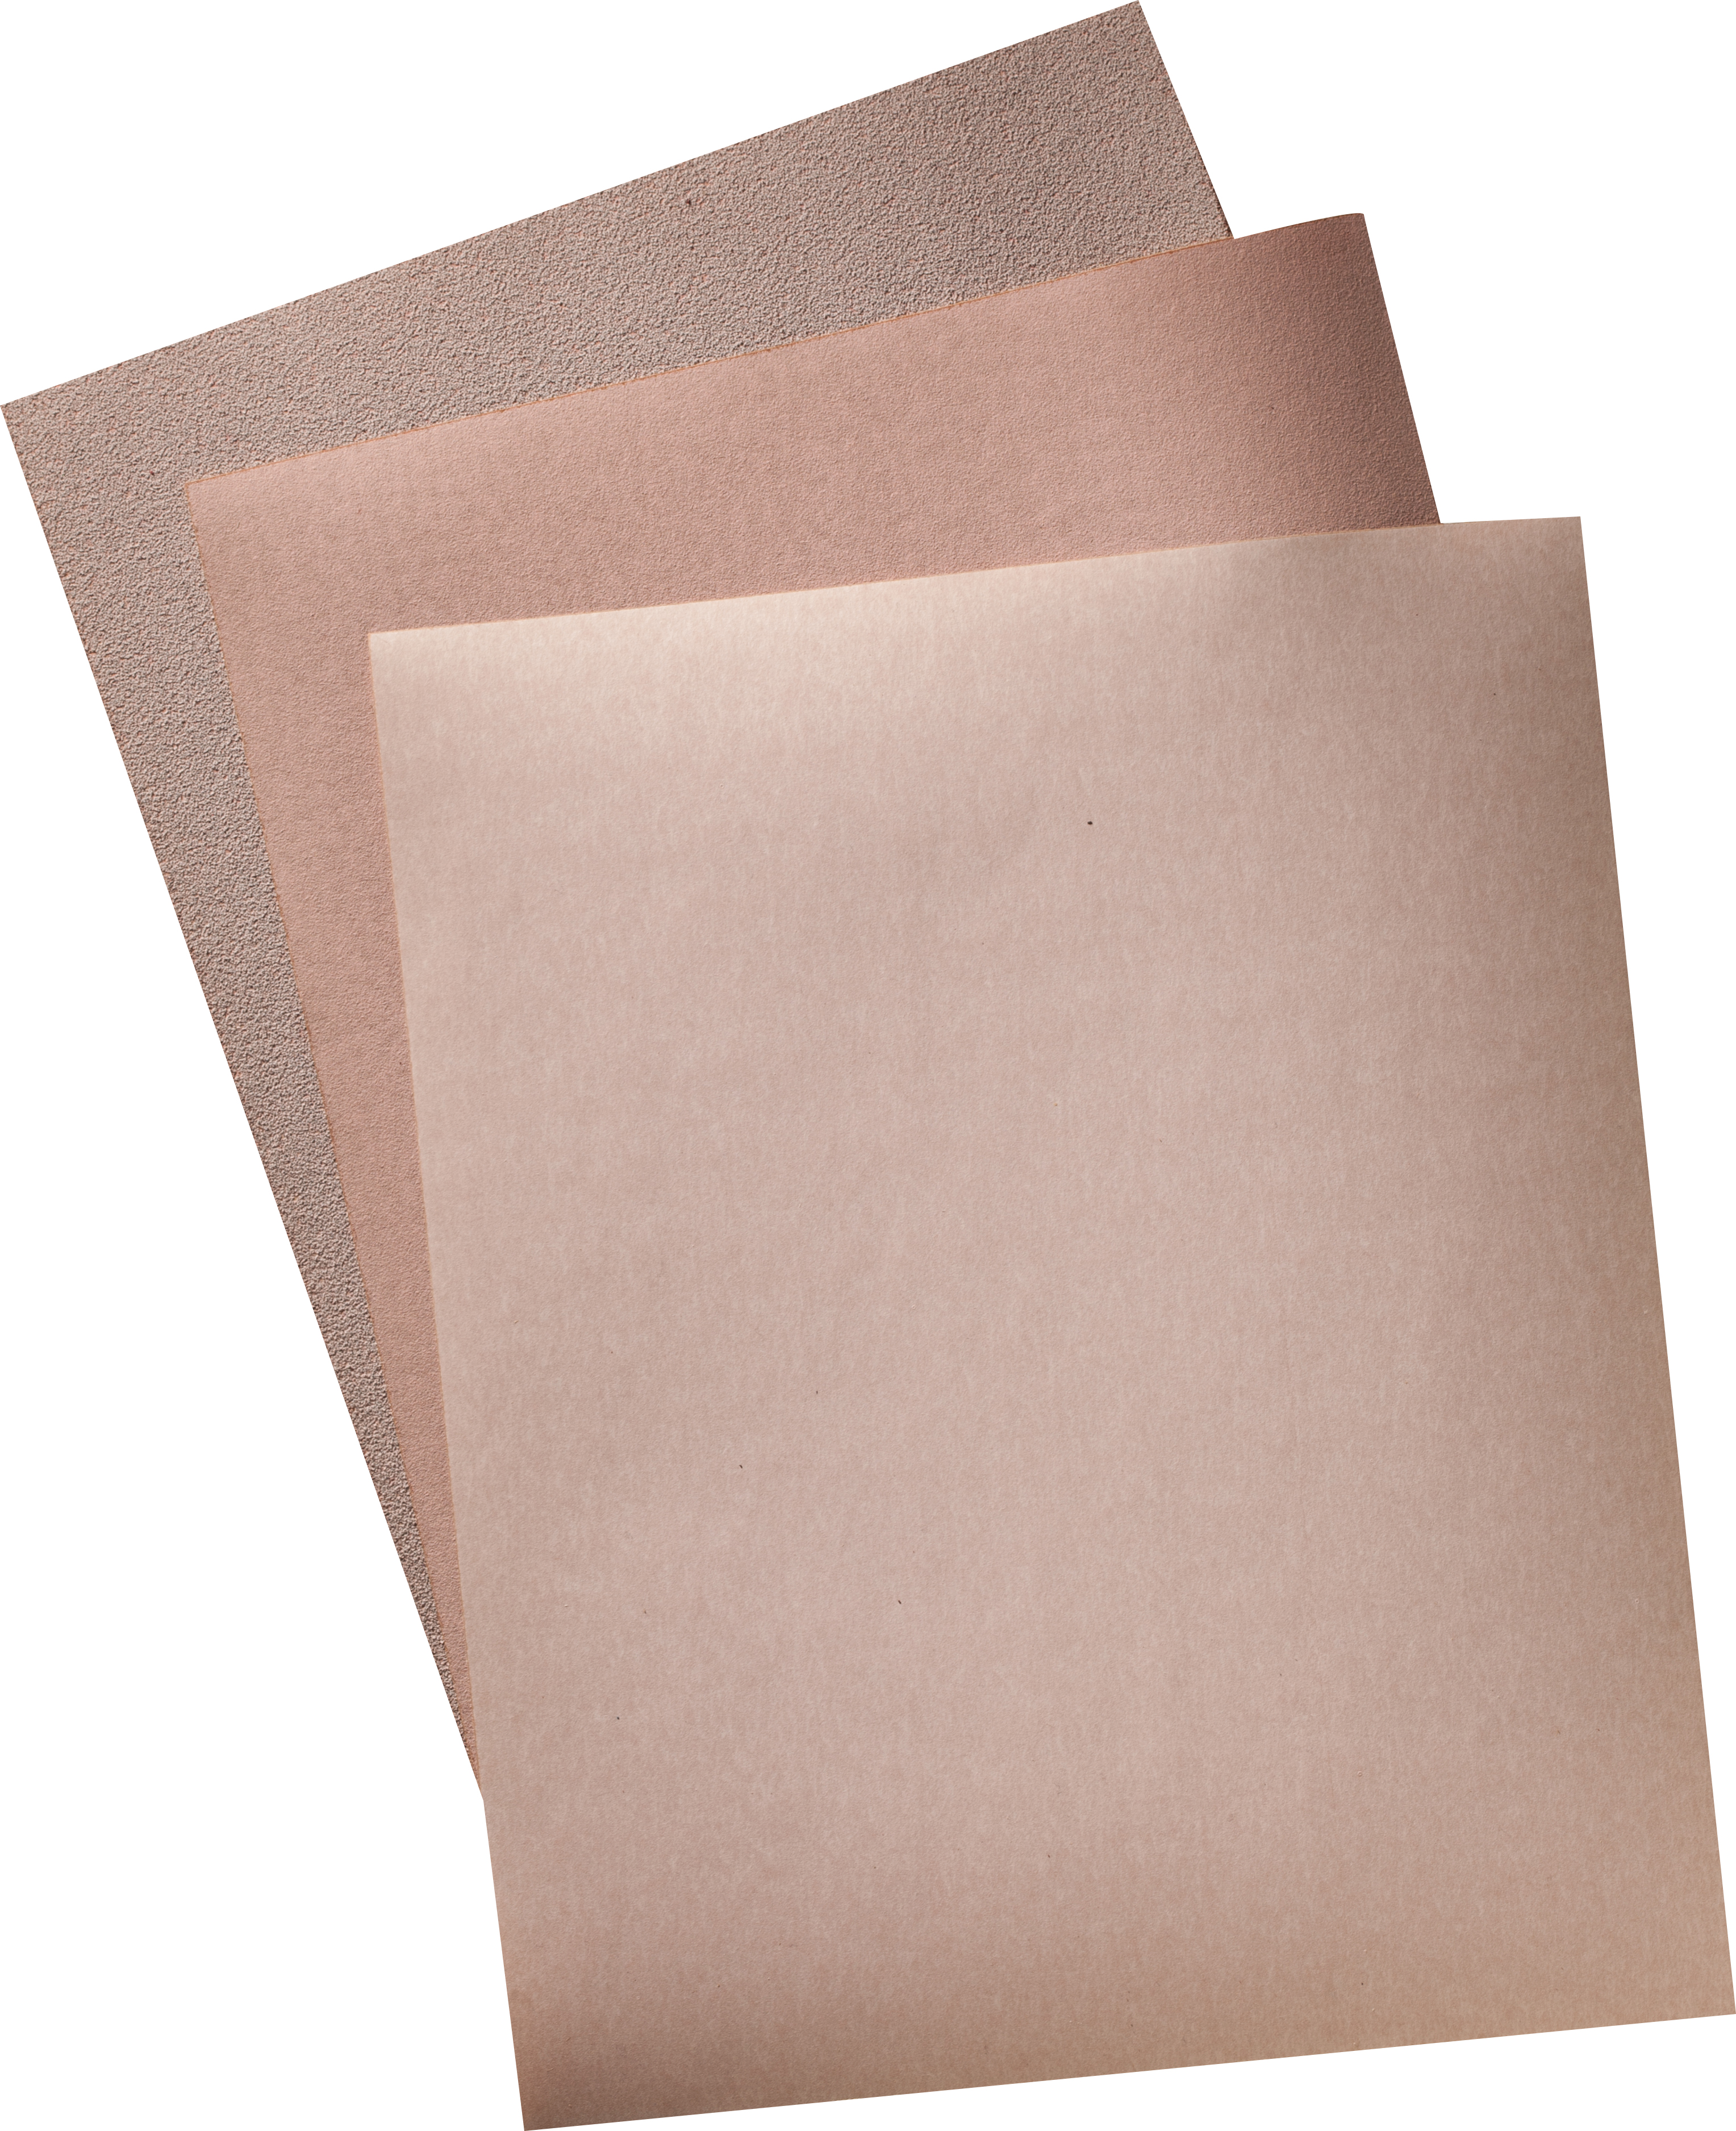 4S 9 X 11 PAPER SHEETS 80X - Sandpaper Sheets